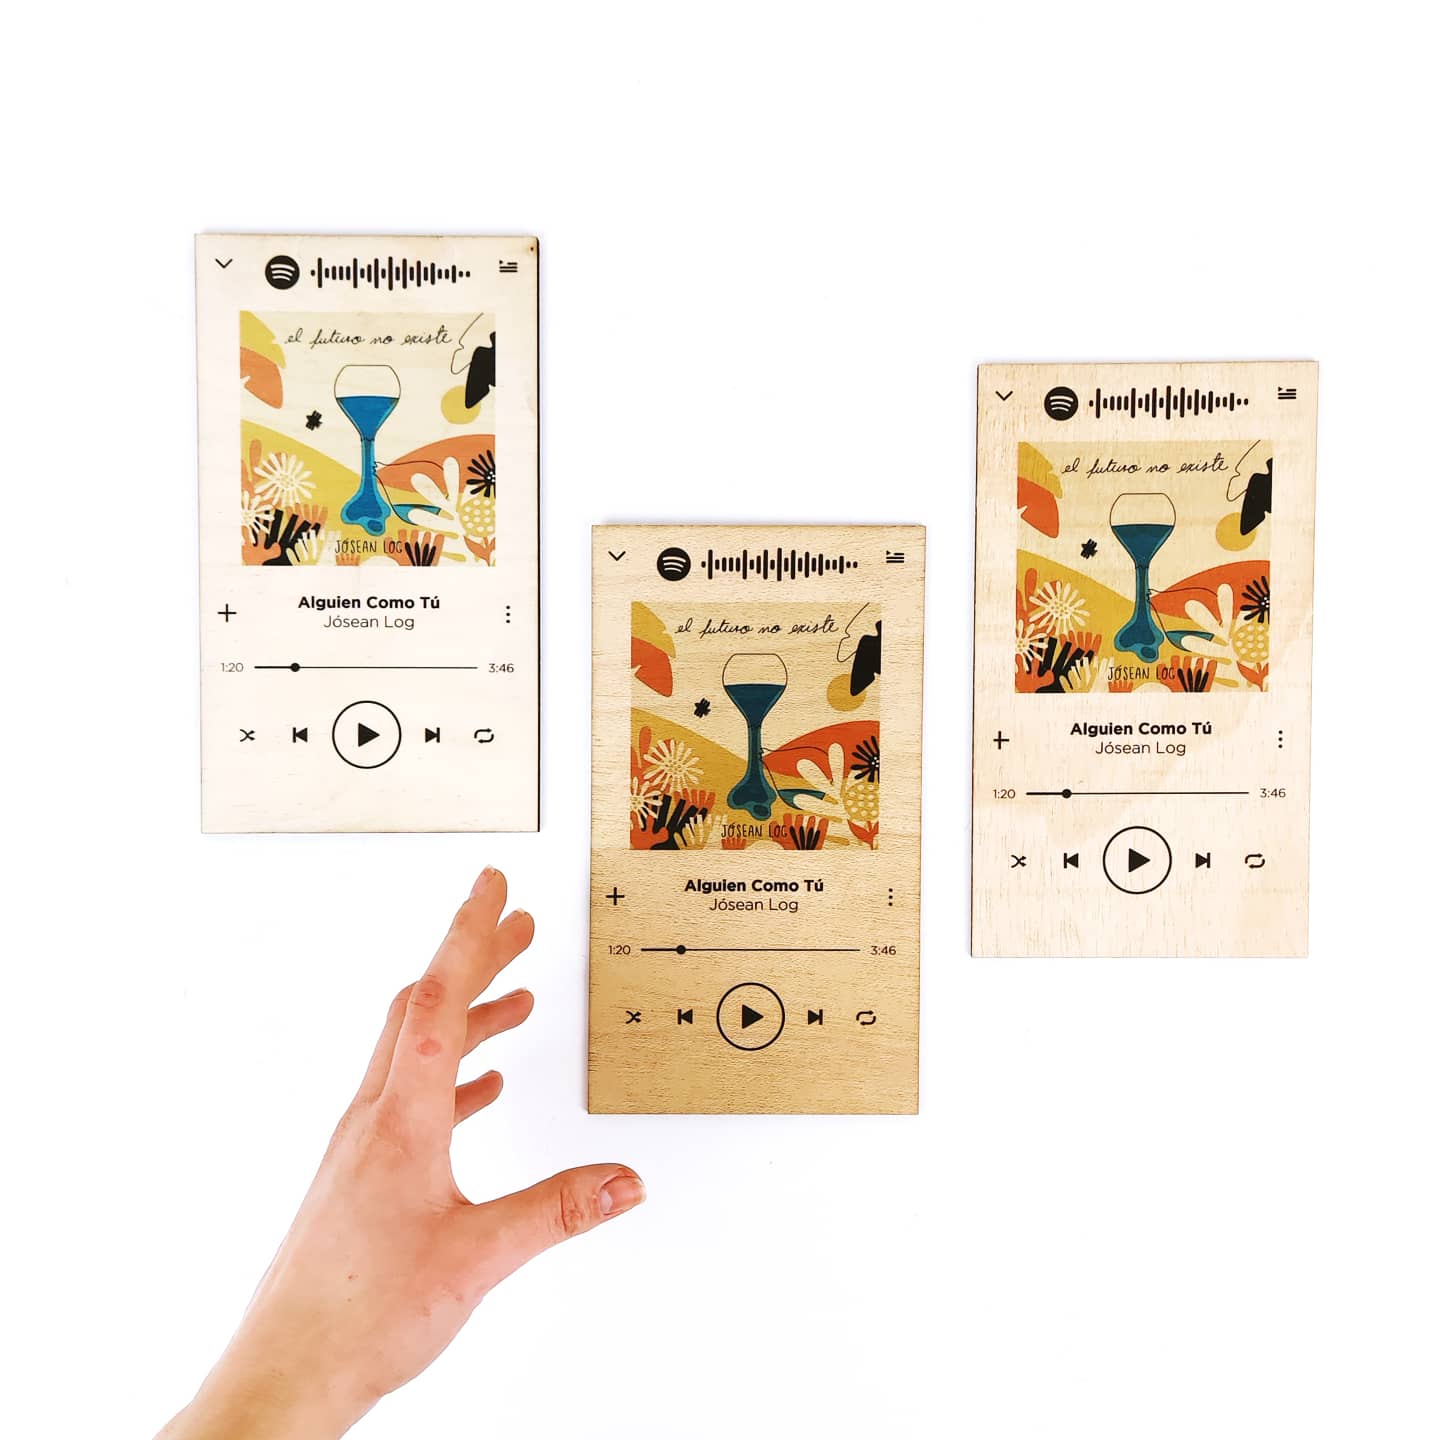 PROMO Placa personalizable Spotify + Base de madera